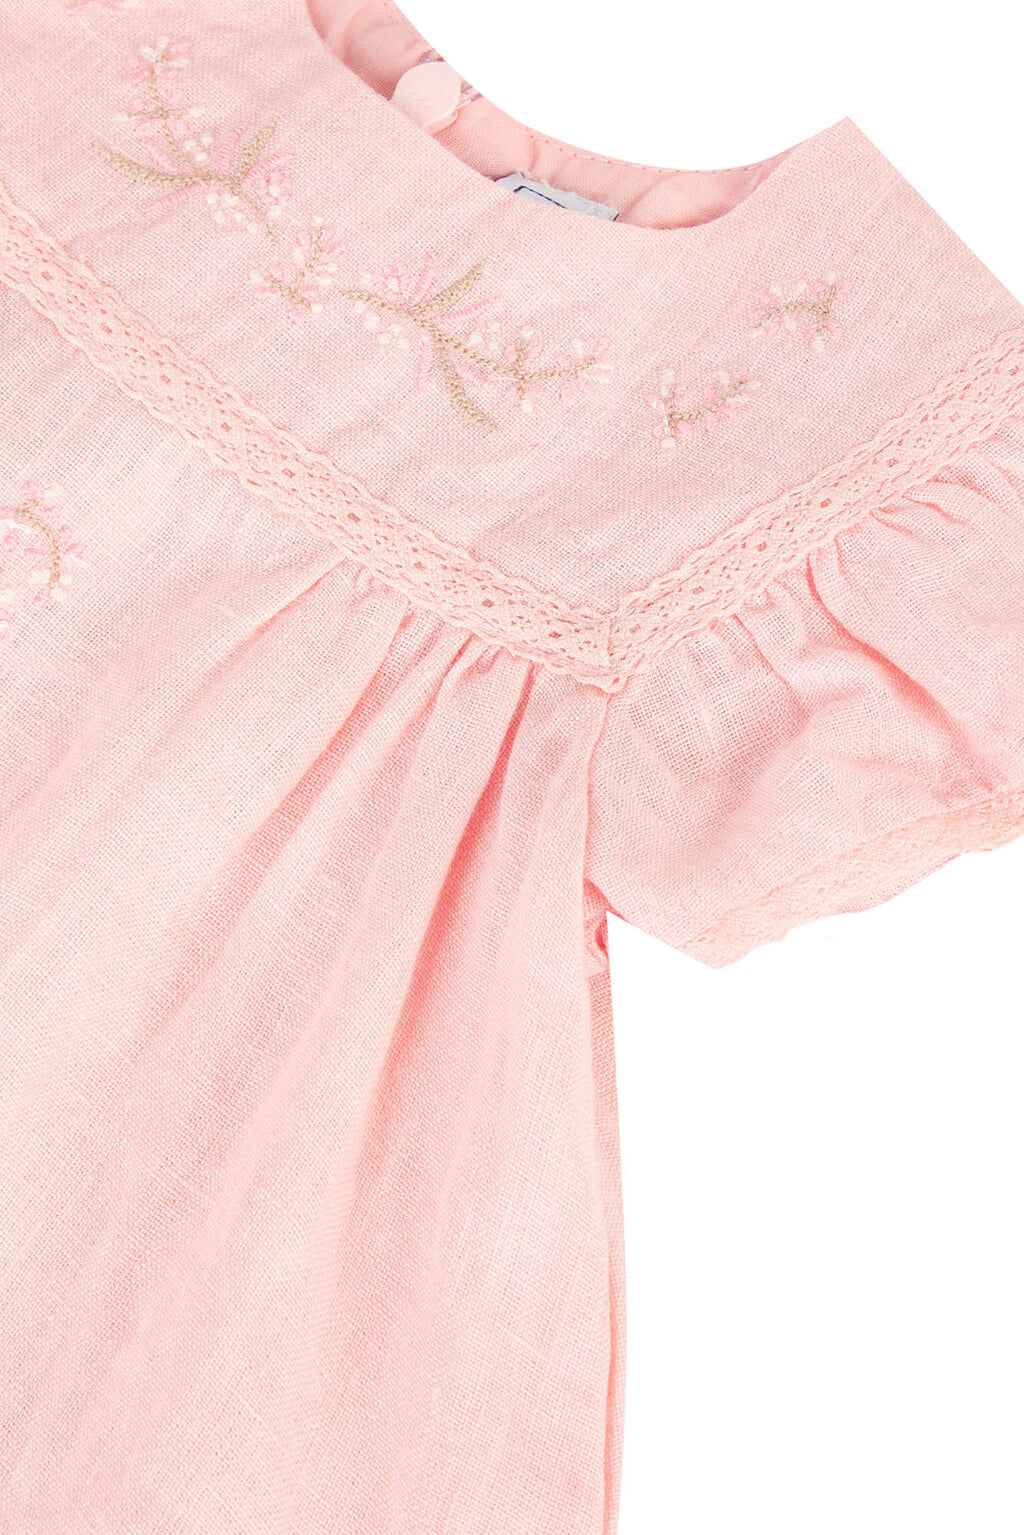 Dress - Linen Pink peony